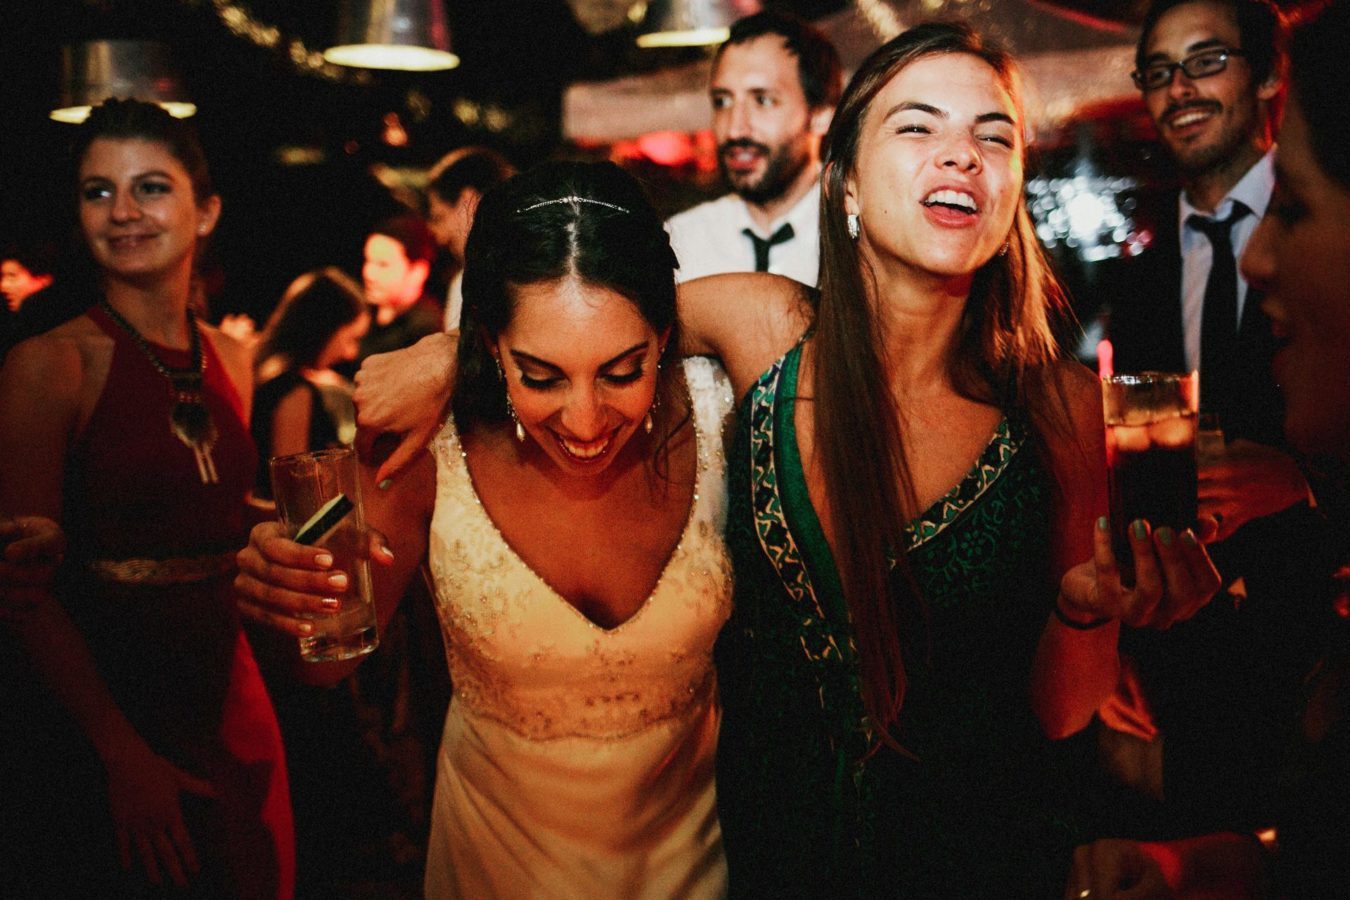 fotografia_por_andres_mejias_fotografo_de_matrimonios_wedding_photography_chile_chilean_wedding_photography_1118-1350x900